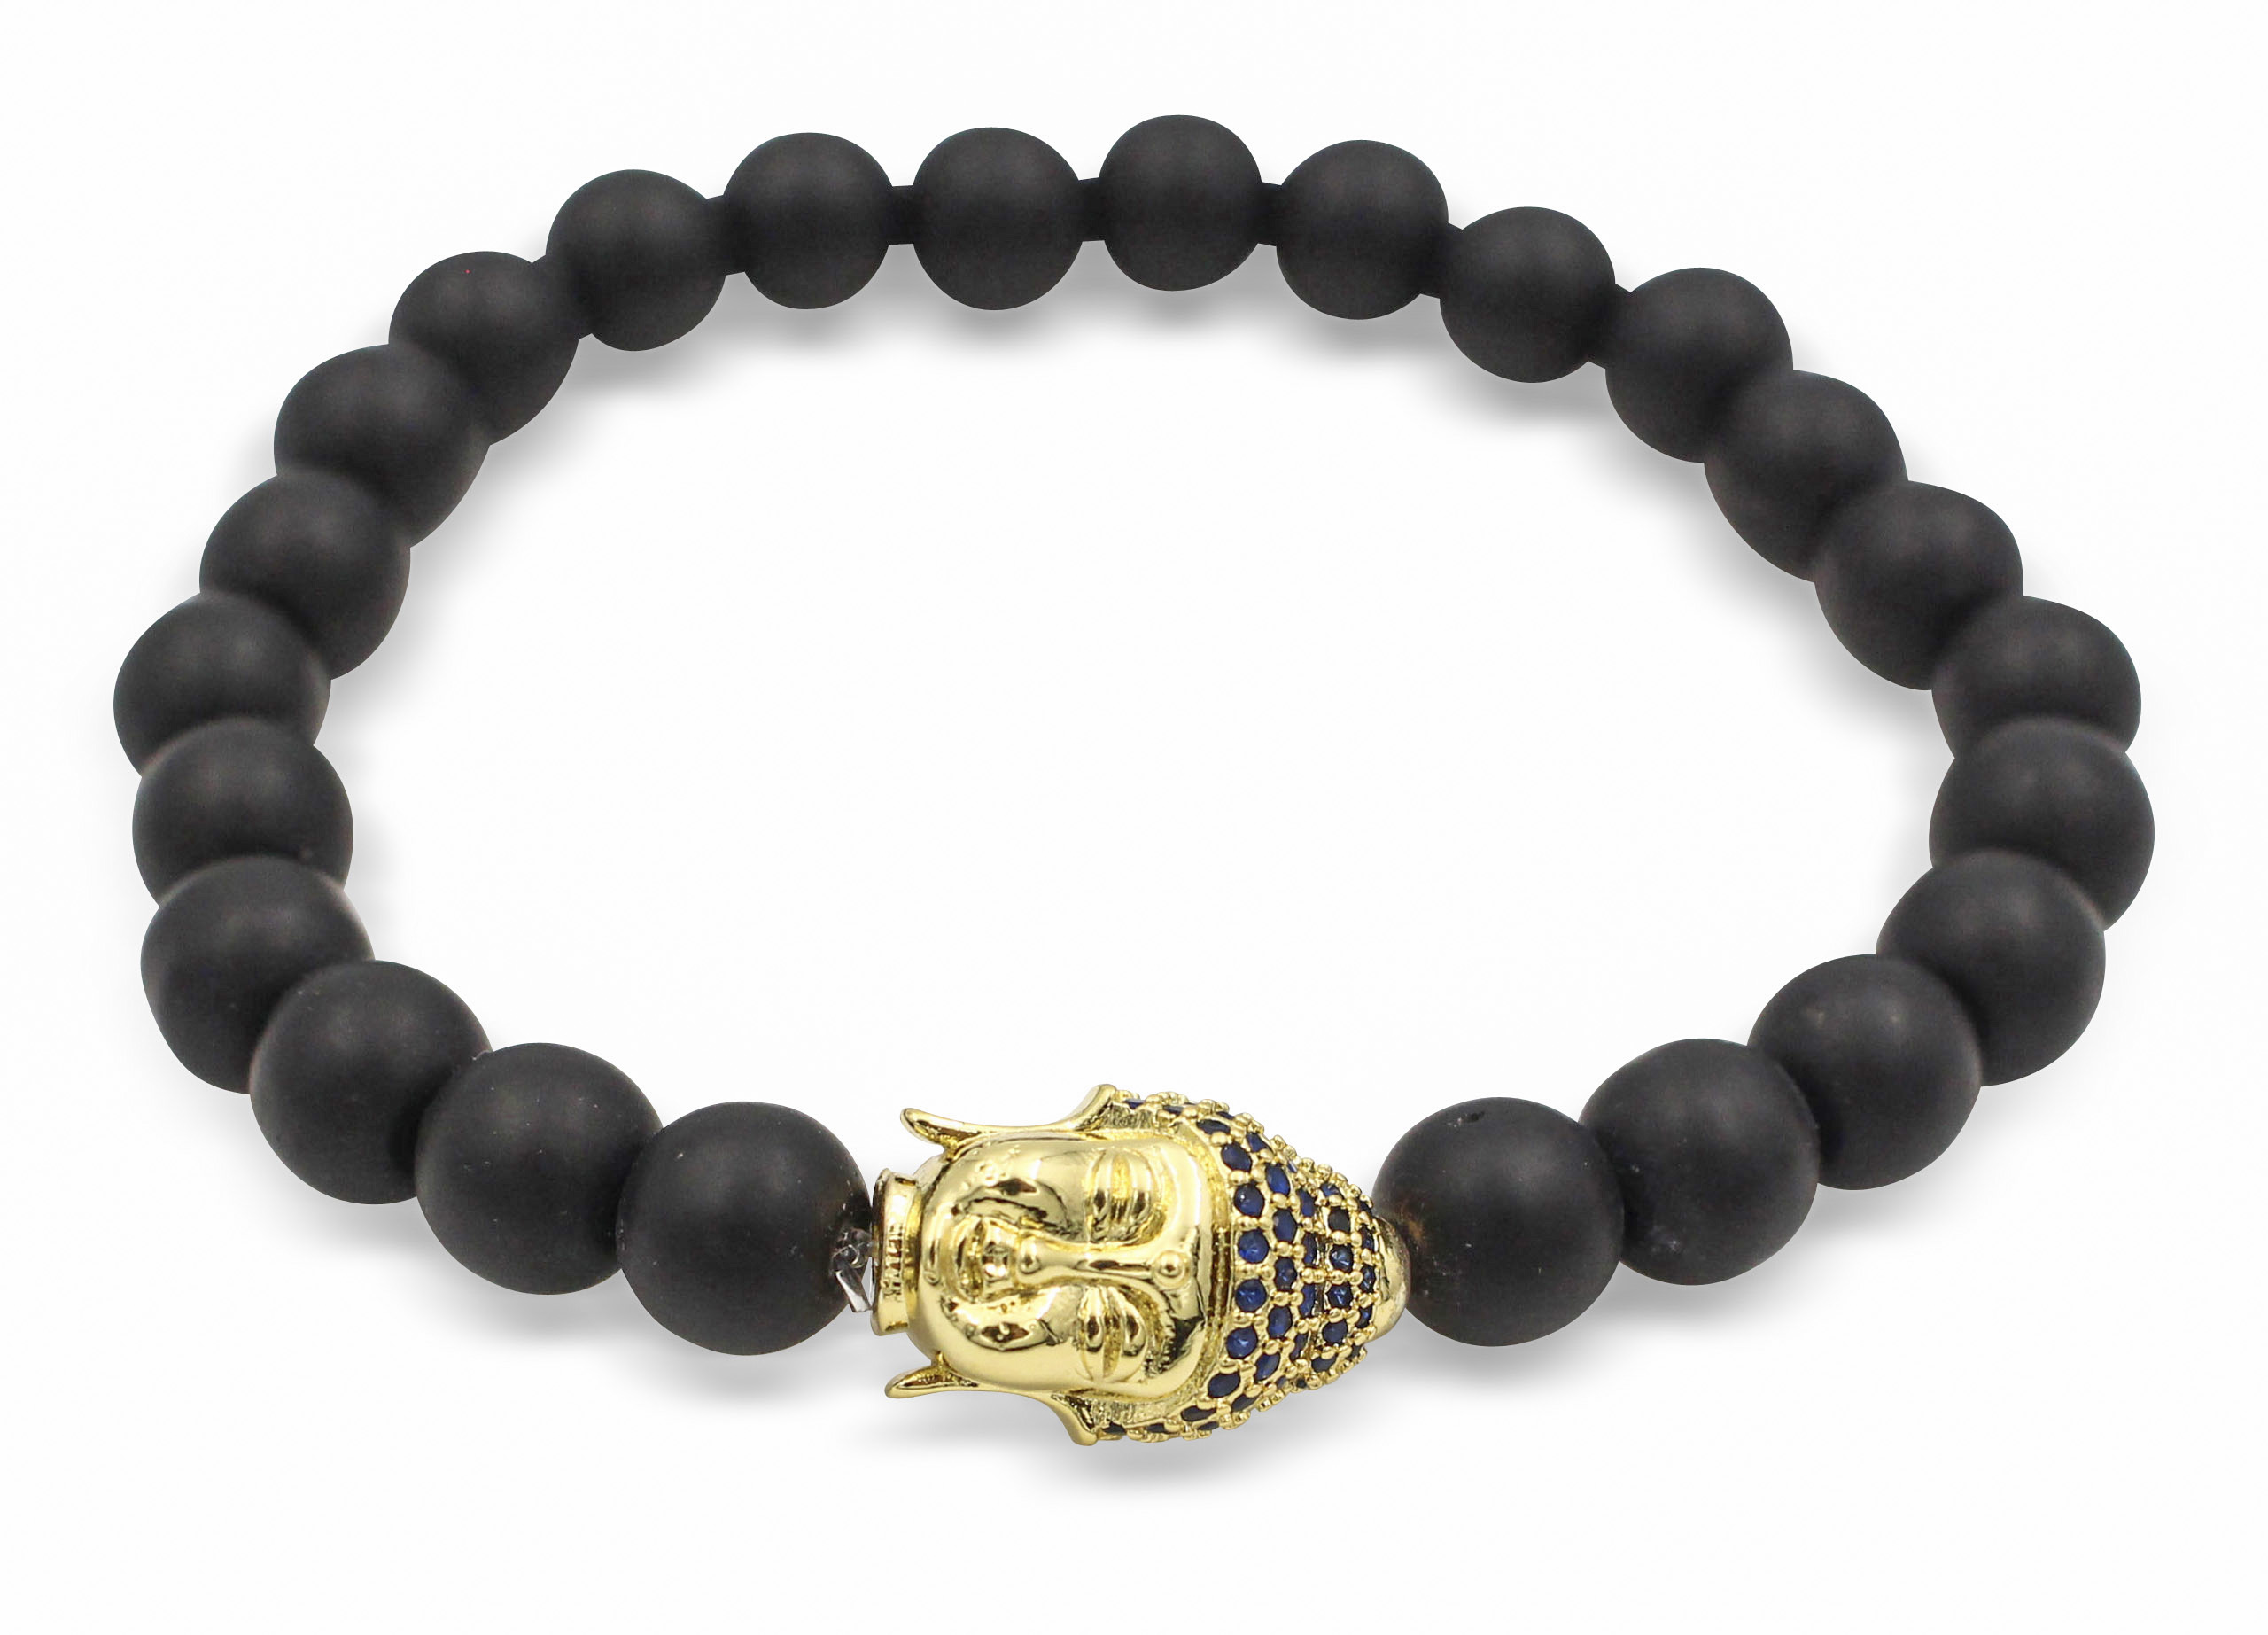 Matte Black Agate Bracelet with Buddha Charm (8mm)- Crystal Dreams